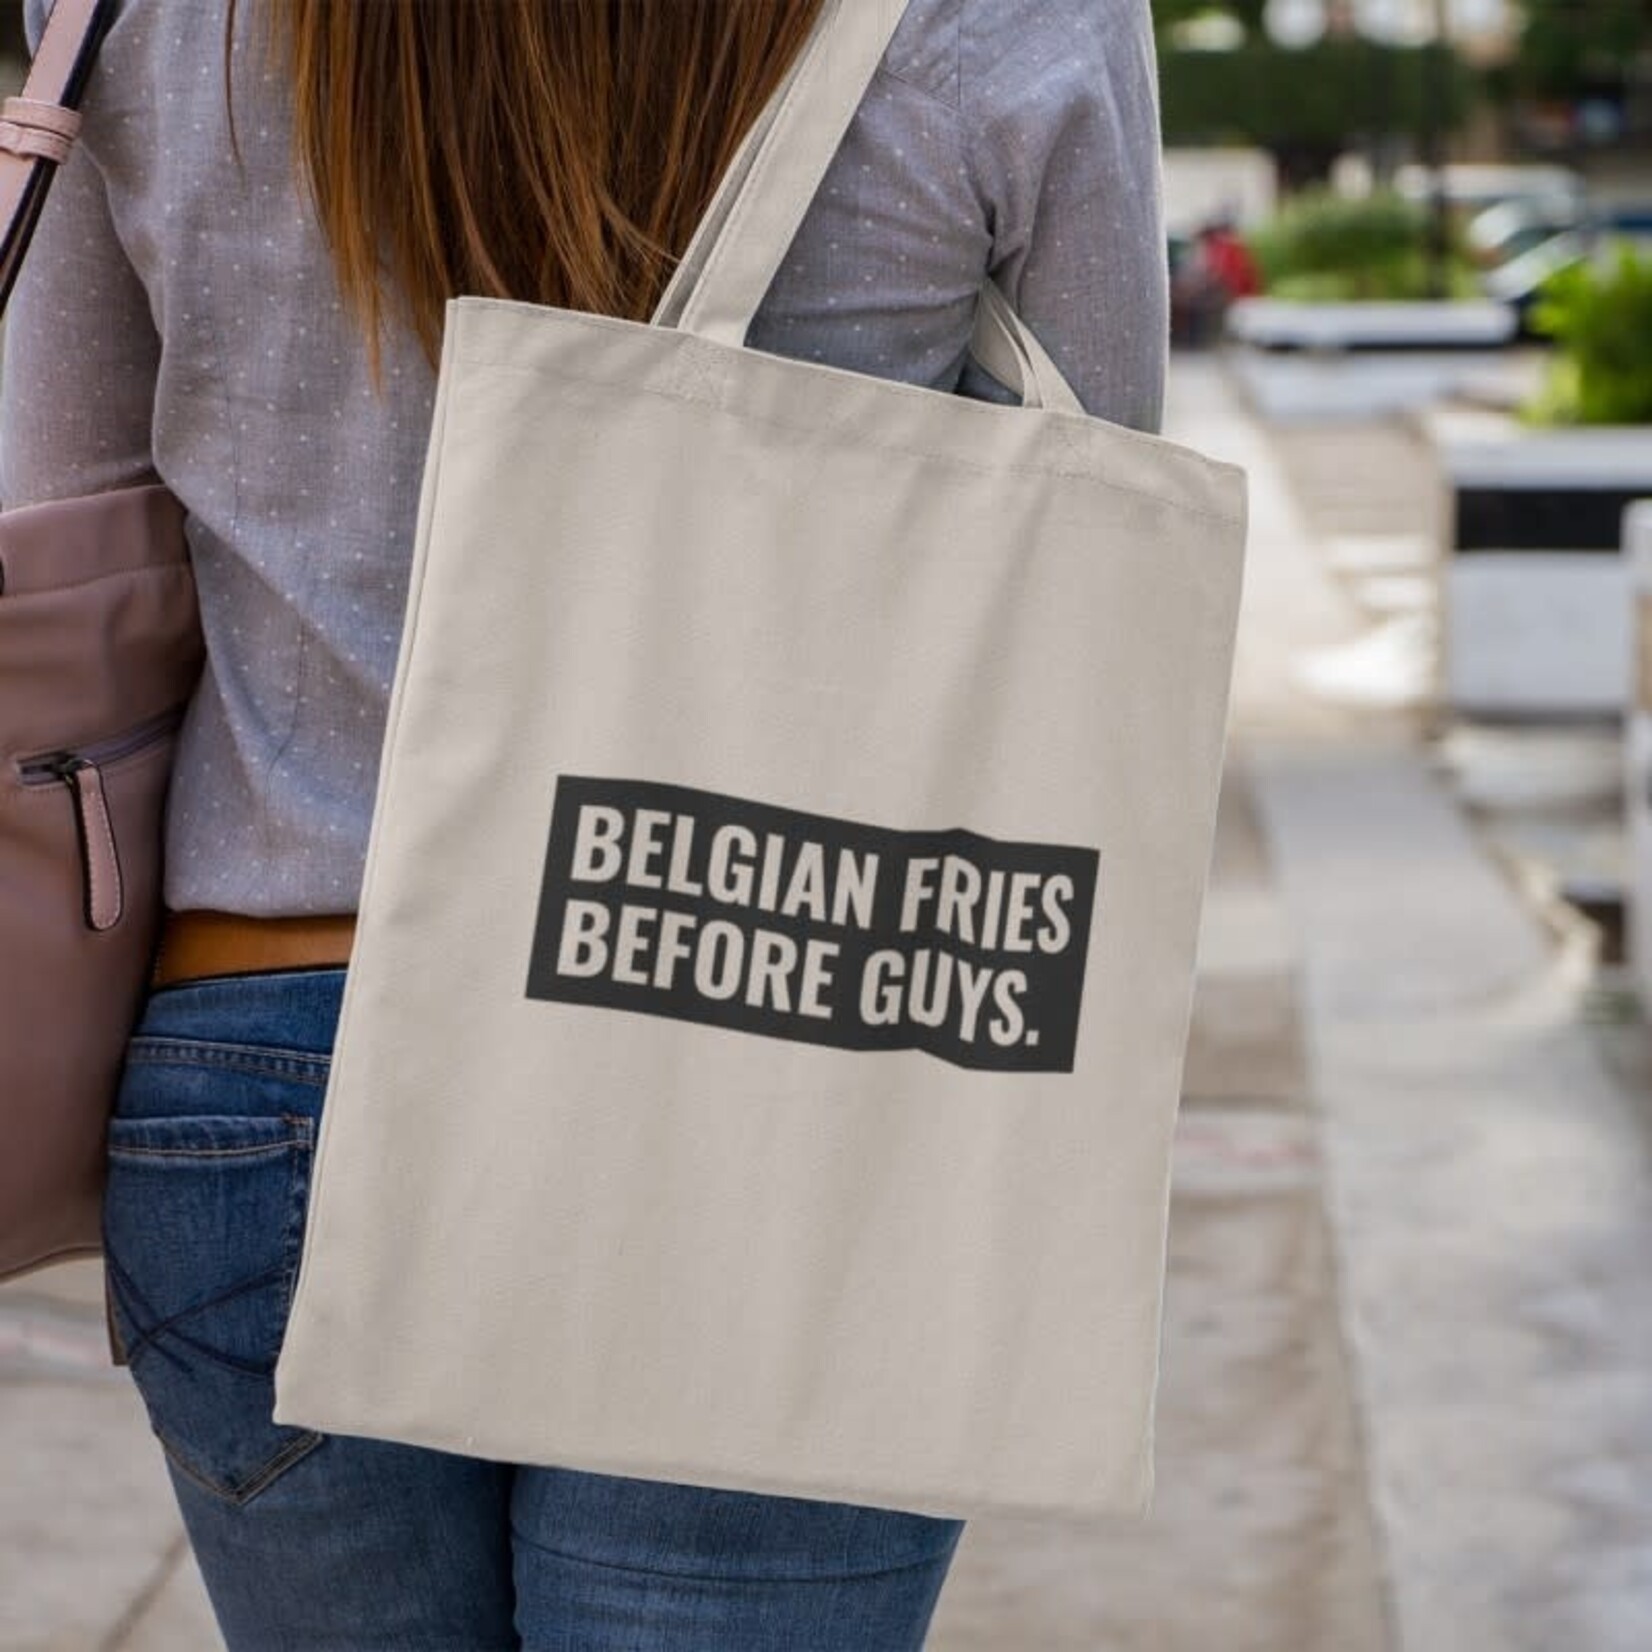 BELGE UNE FOIS BELGE UNE FOIS - Totebag Belgian fries before guys